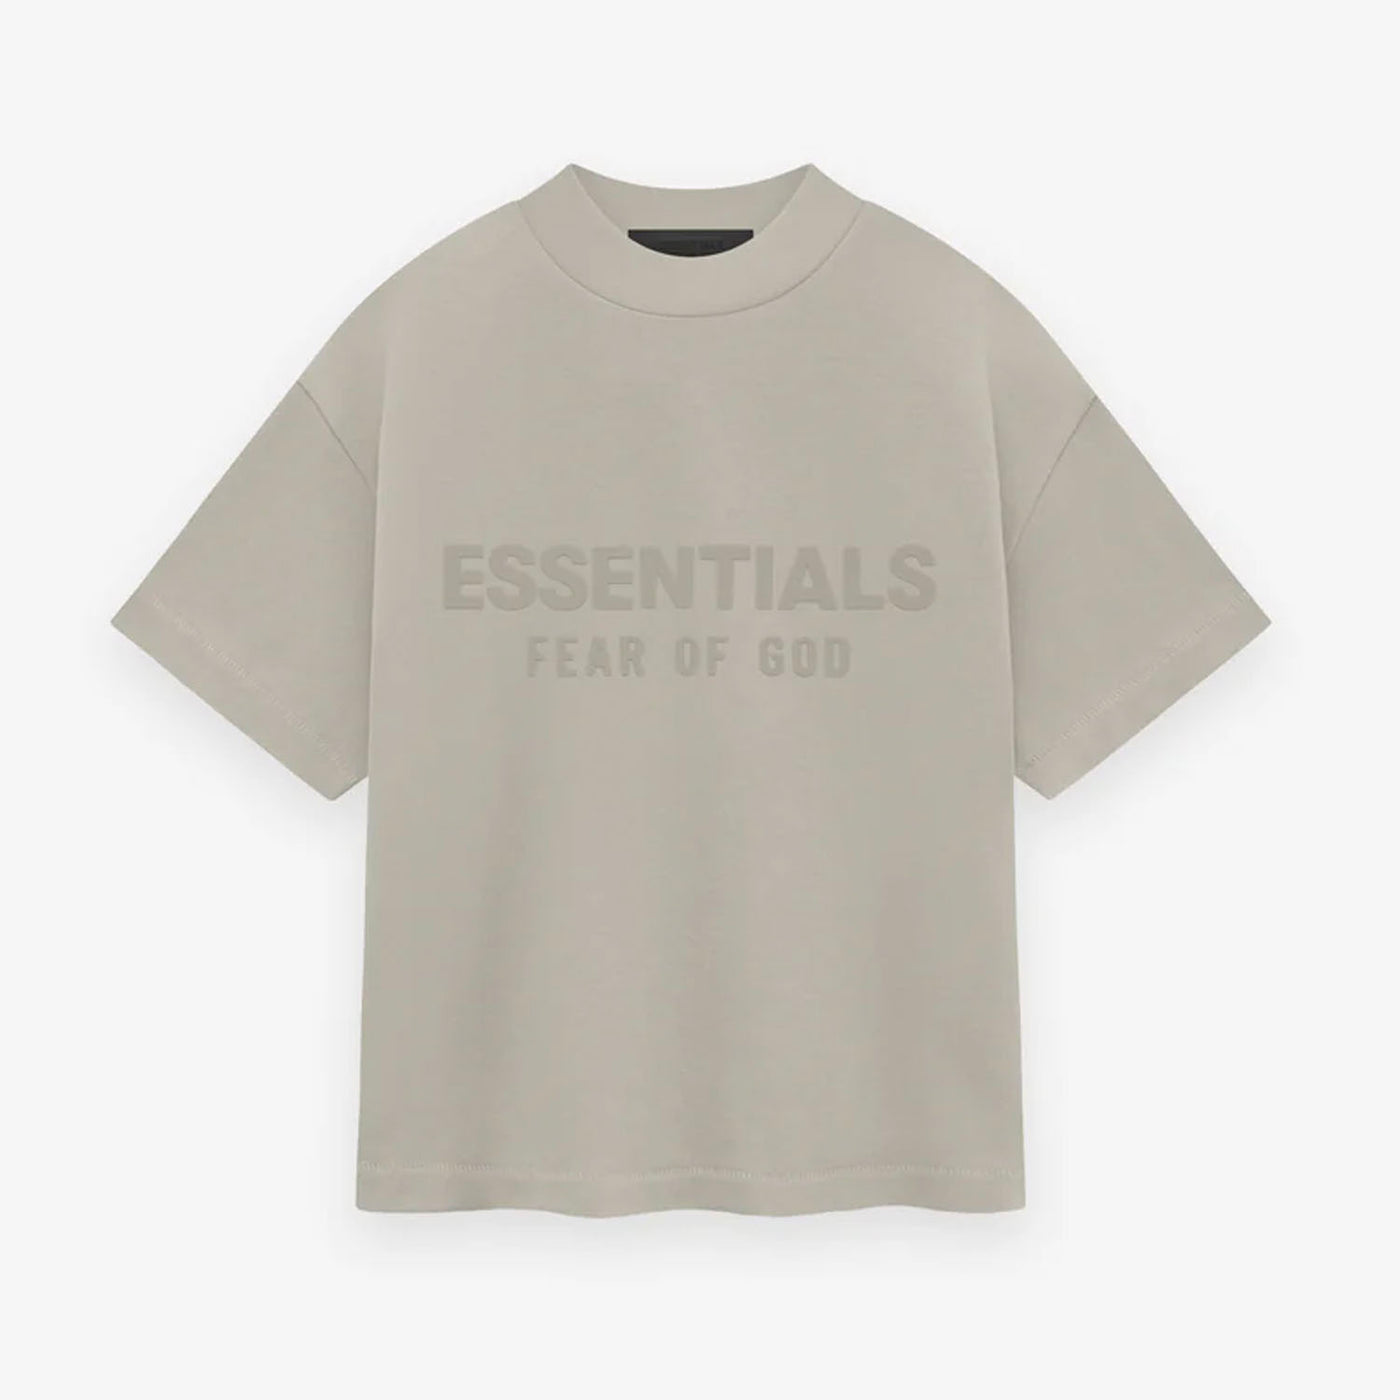 Essentials Fear Of God T-Shirt - Seal